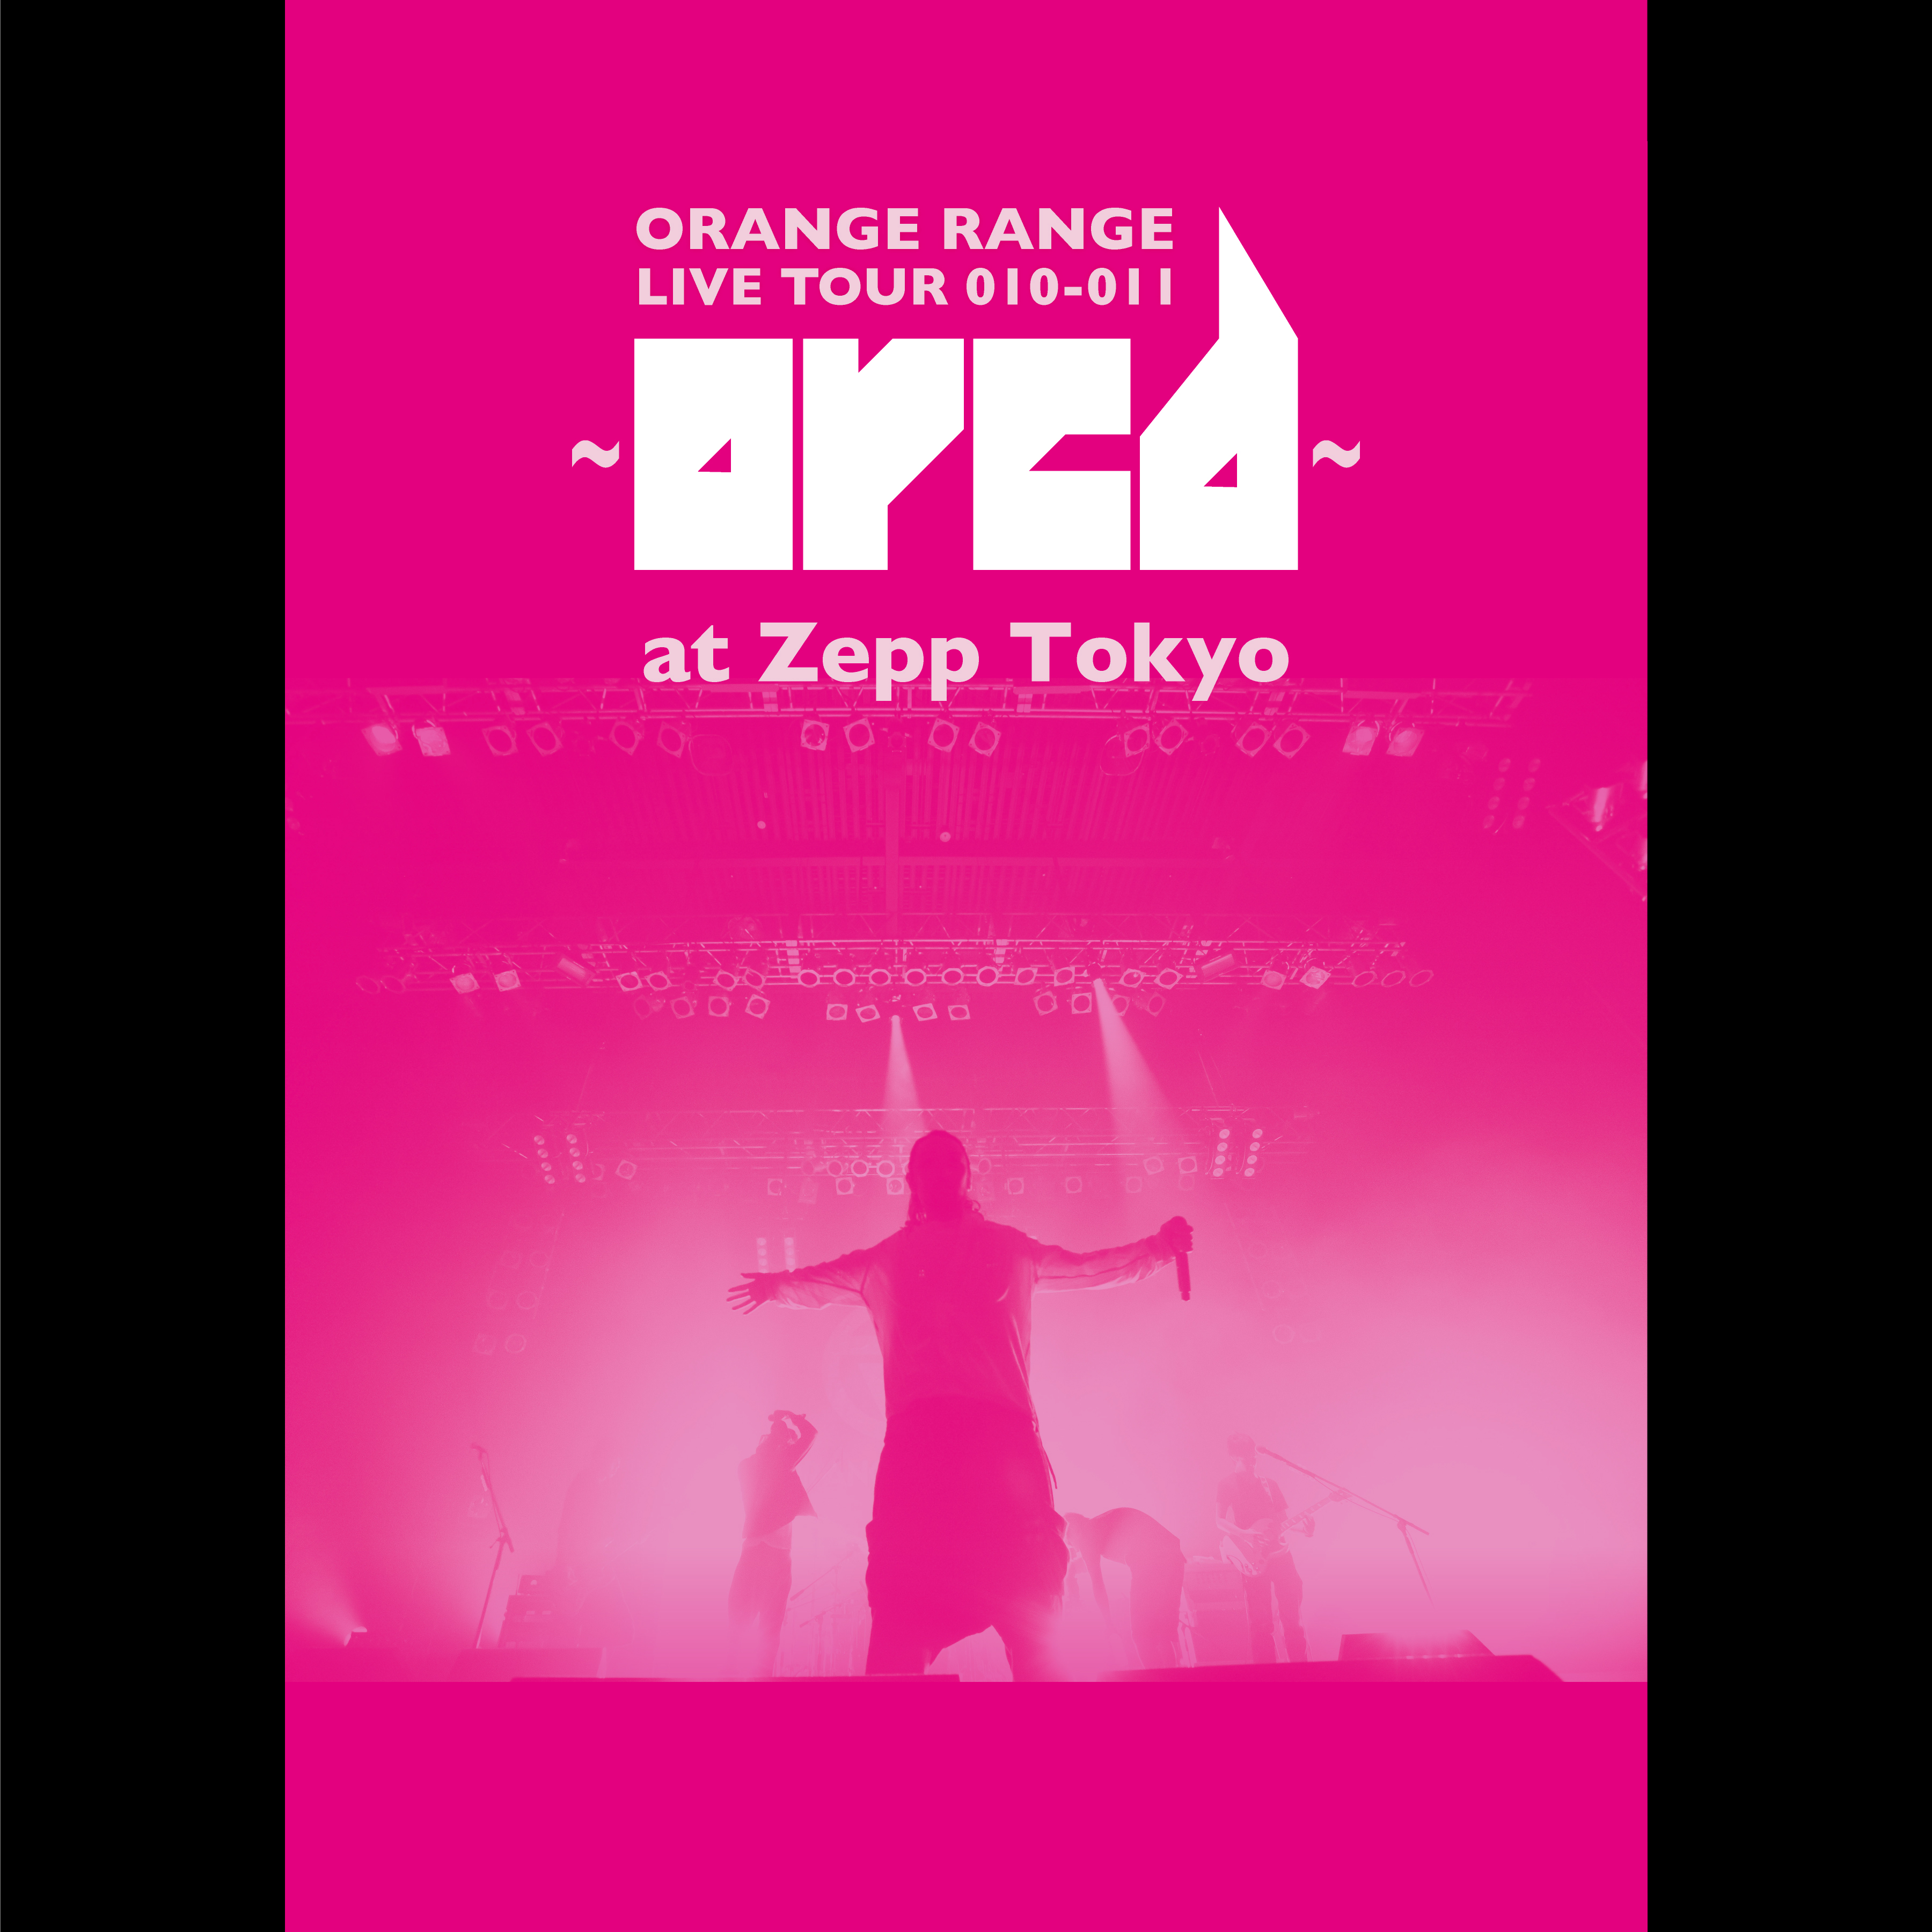 LIVE TOUR 010-011 〜orcd〜 at Zepp Tokyo【ライブALBUM】